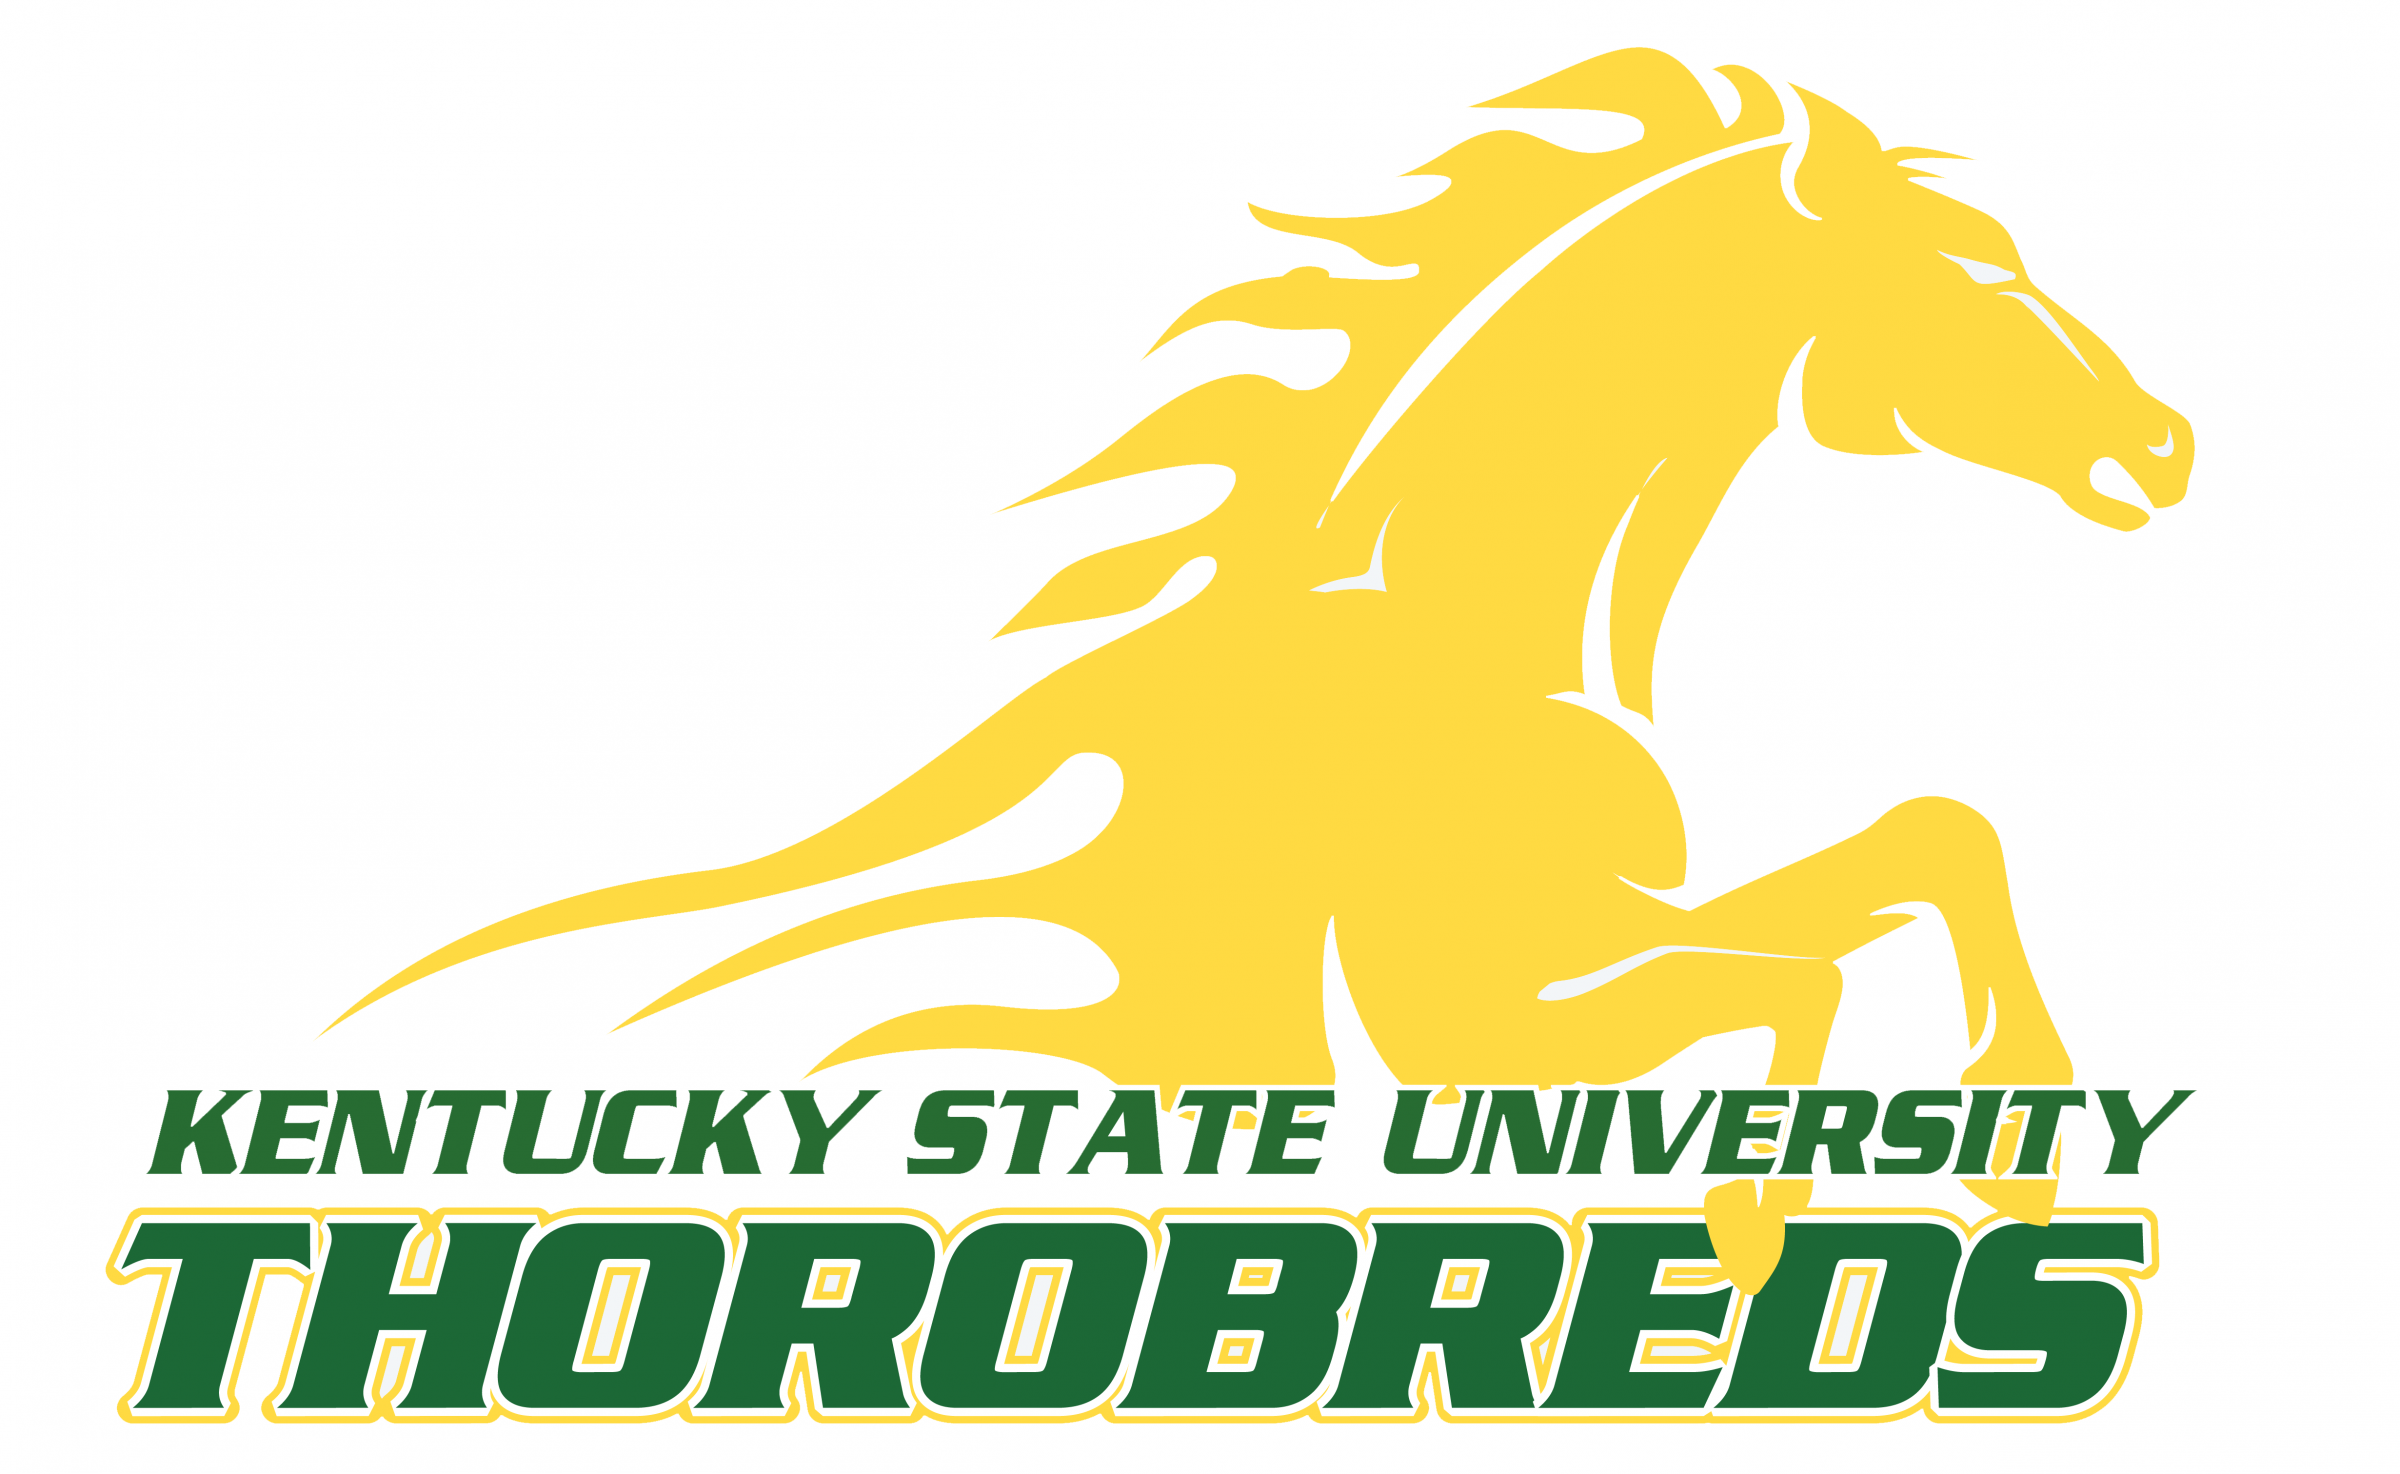 Kentucky State University Thorobreds logo:  head and torso of yellow horse